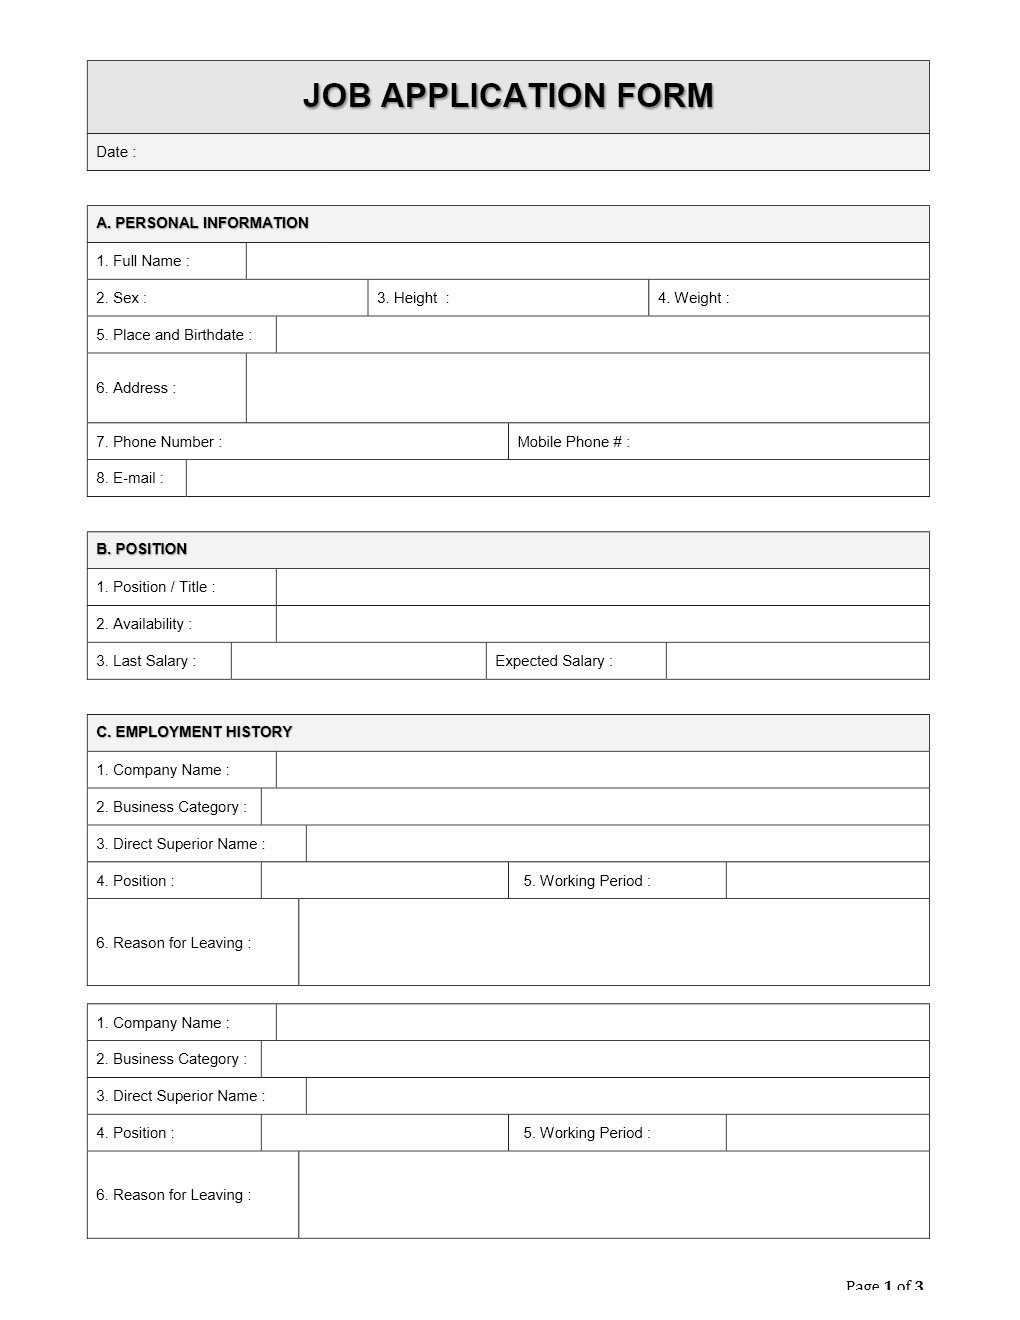 Employment Application Template Microsoft Word Employee Job Application form